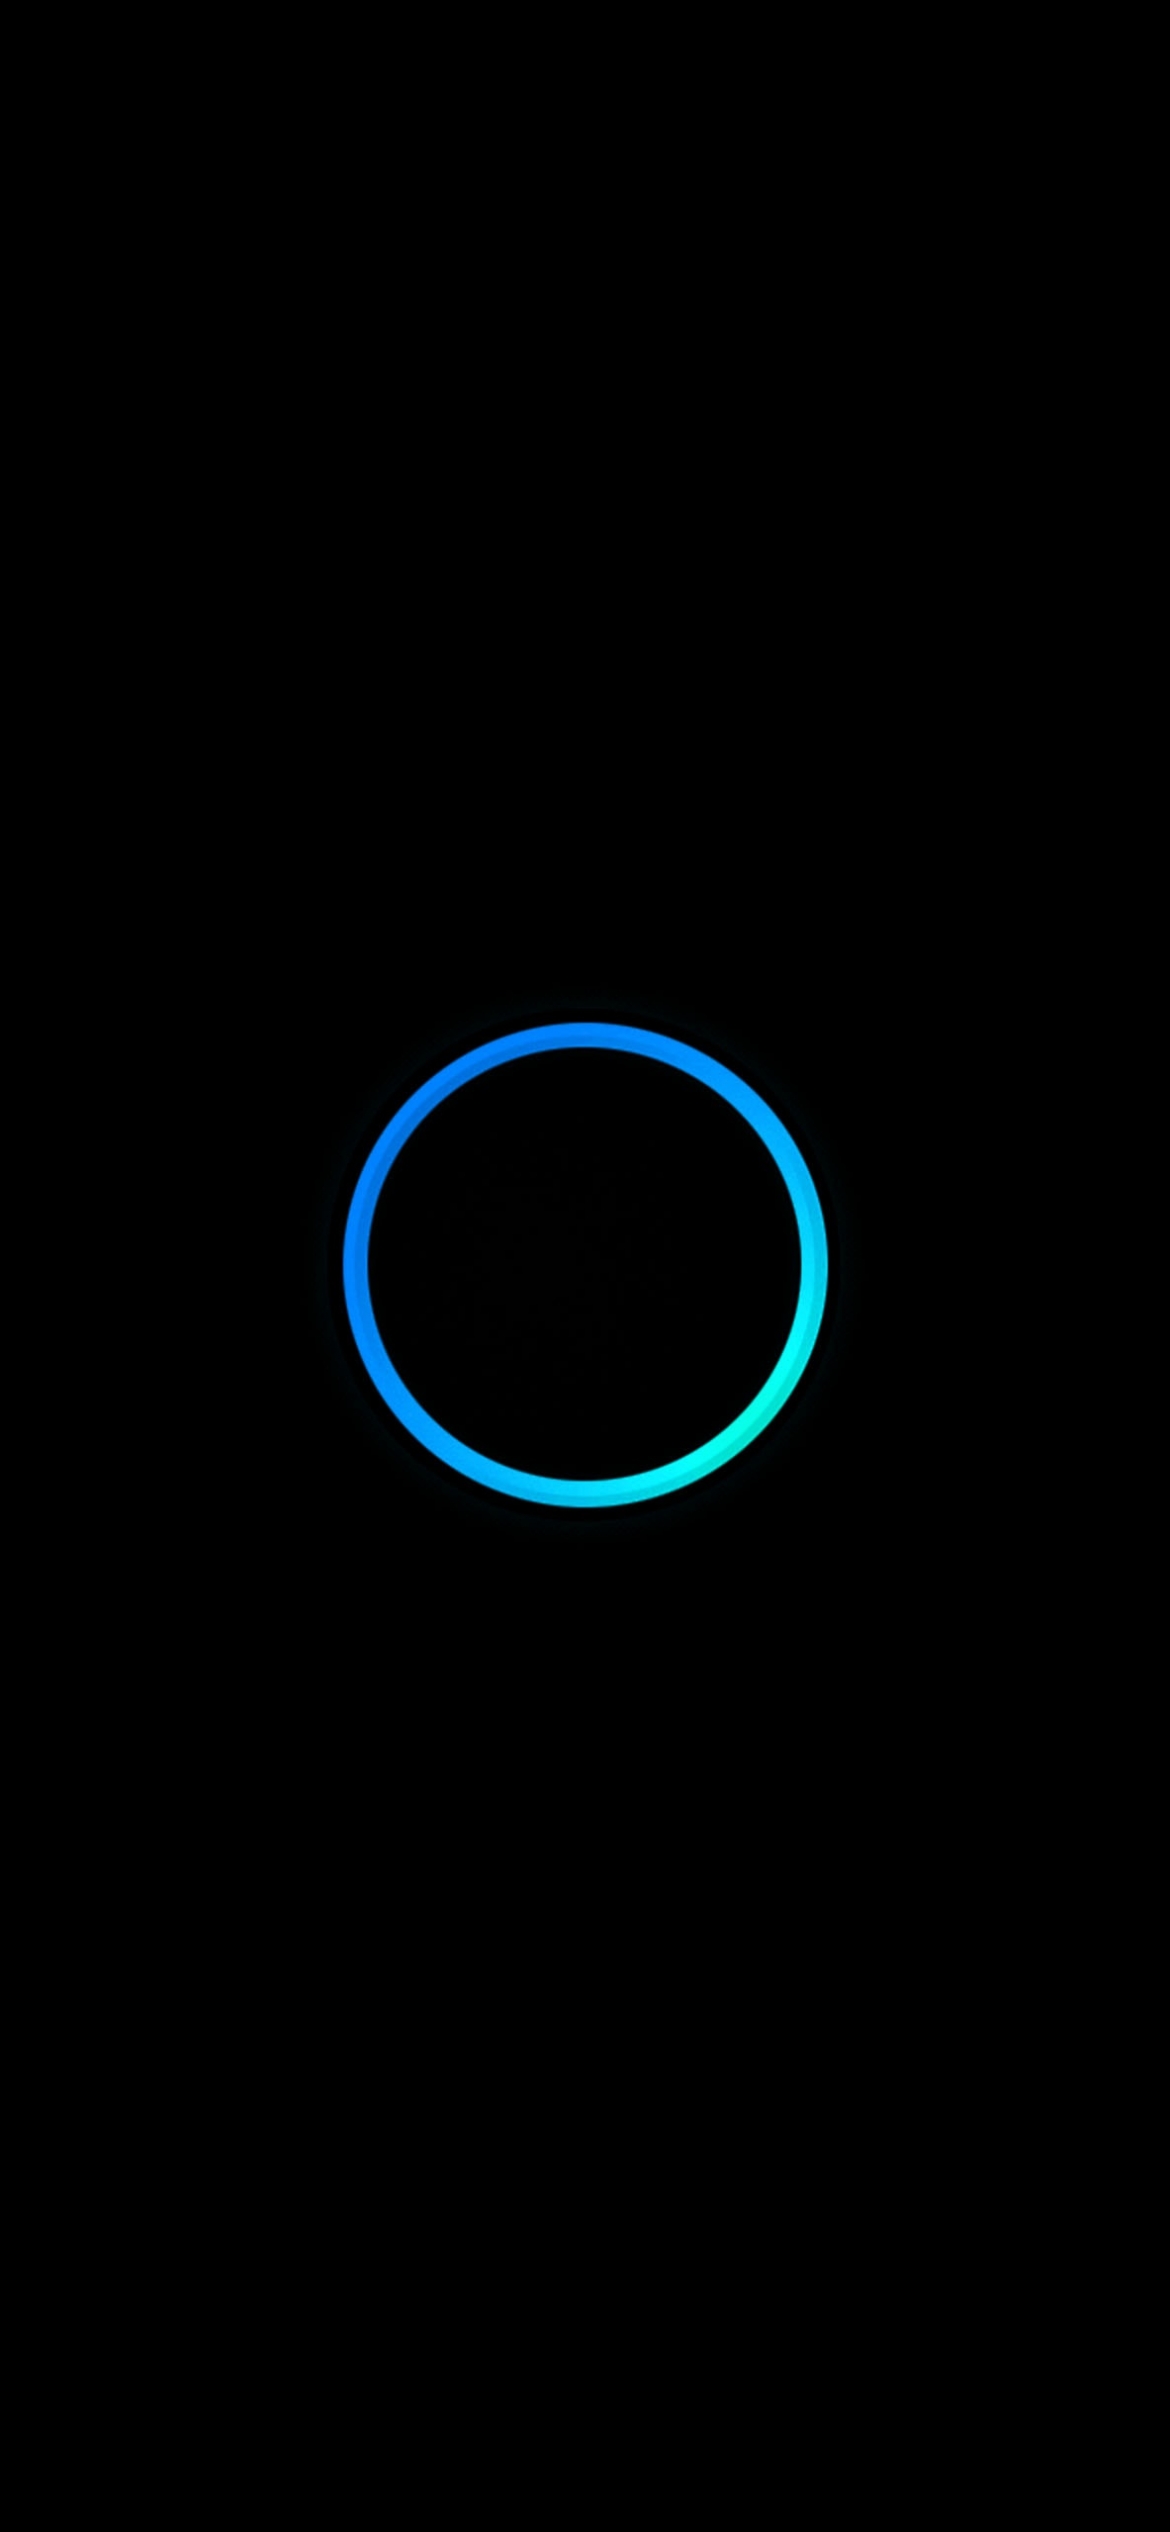 Download Minimal Blue Circle on Black Background Wallpaper - GetWalls.io